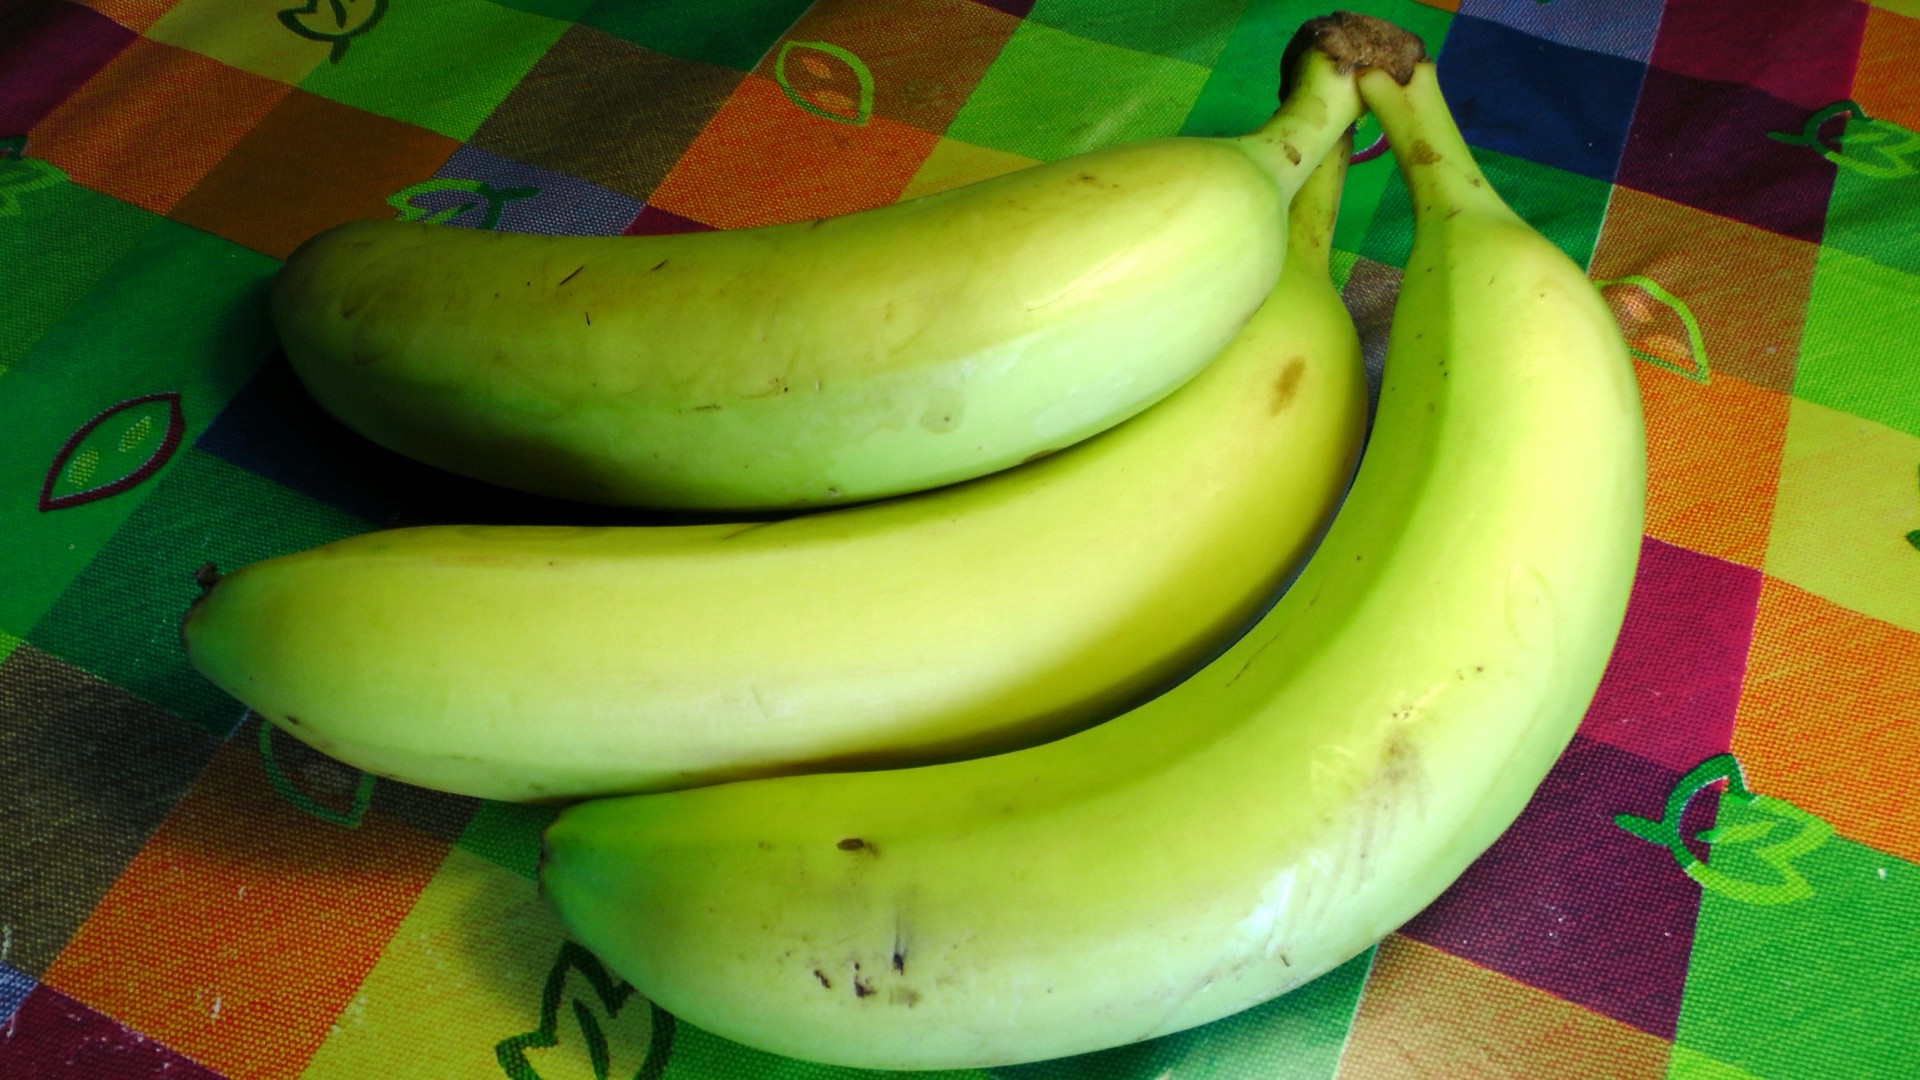 Bananas From The Market